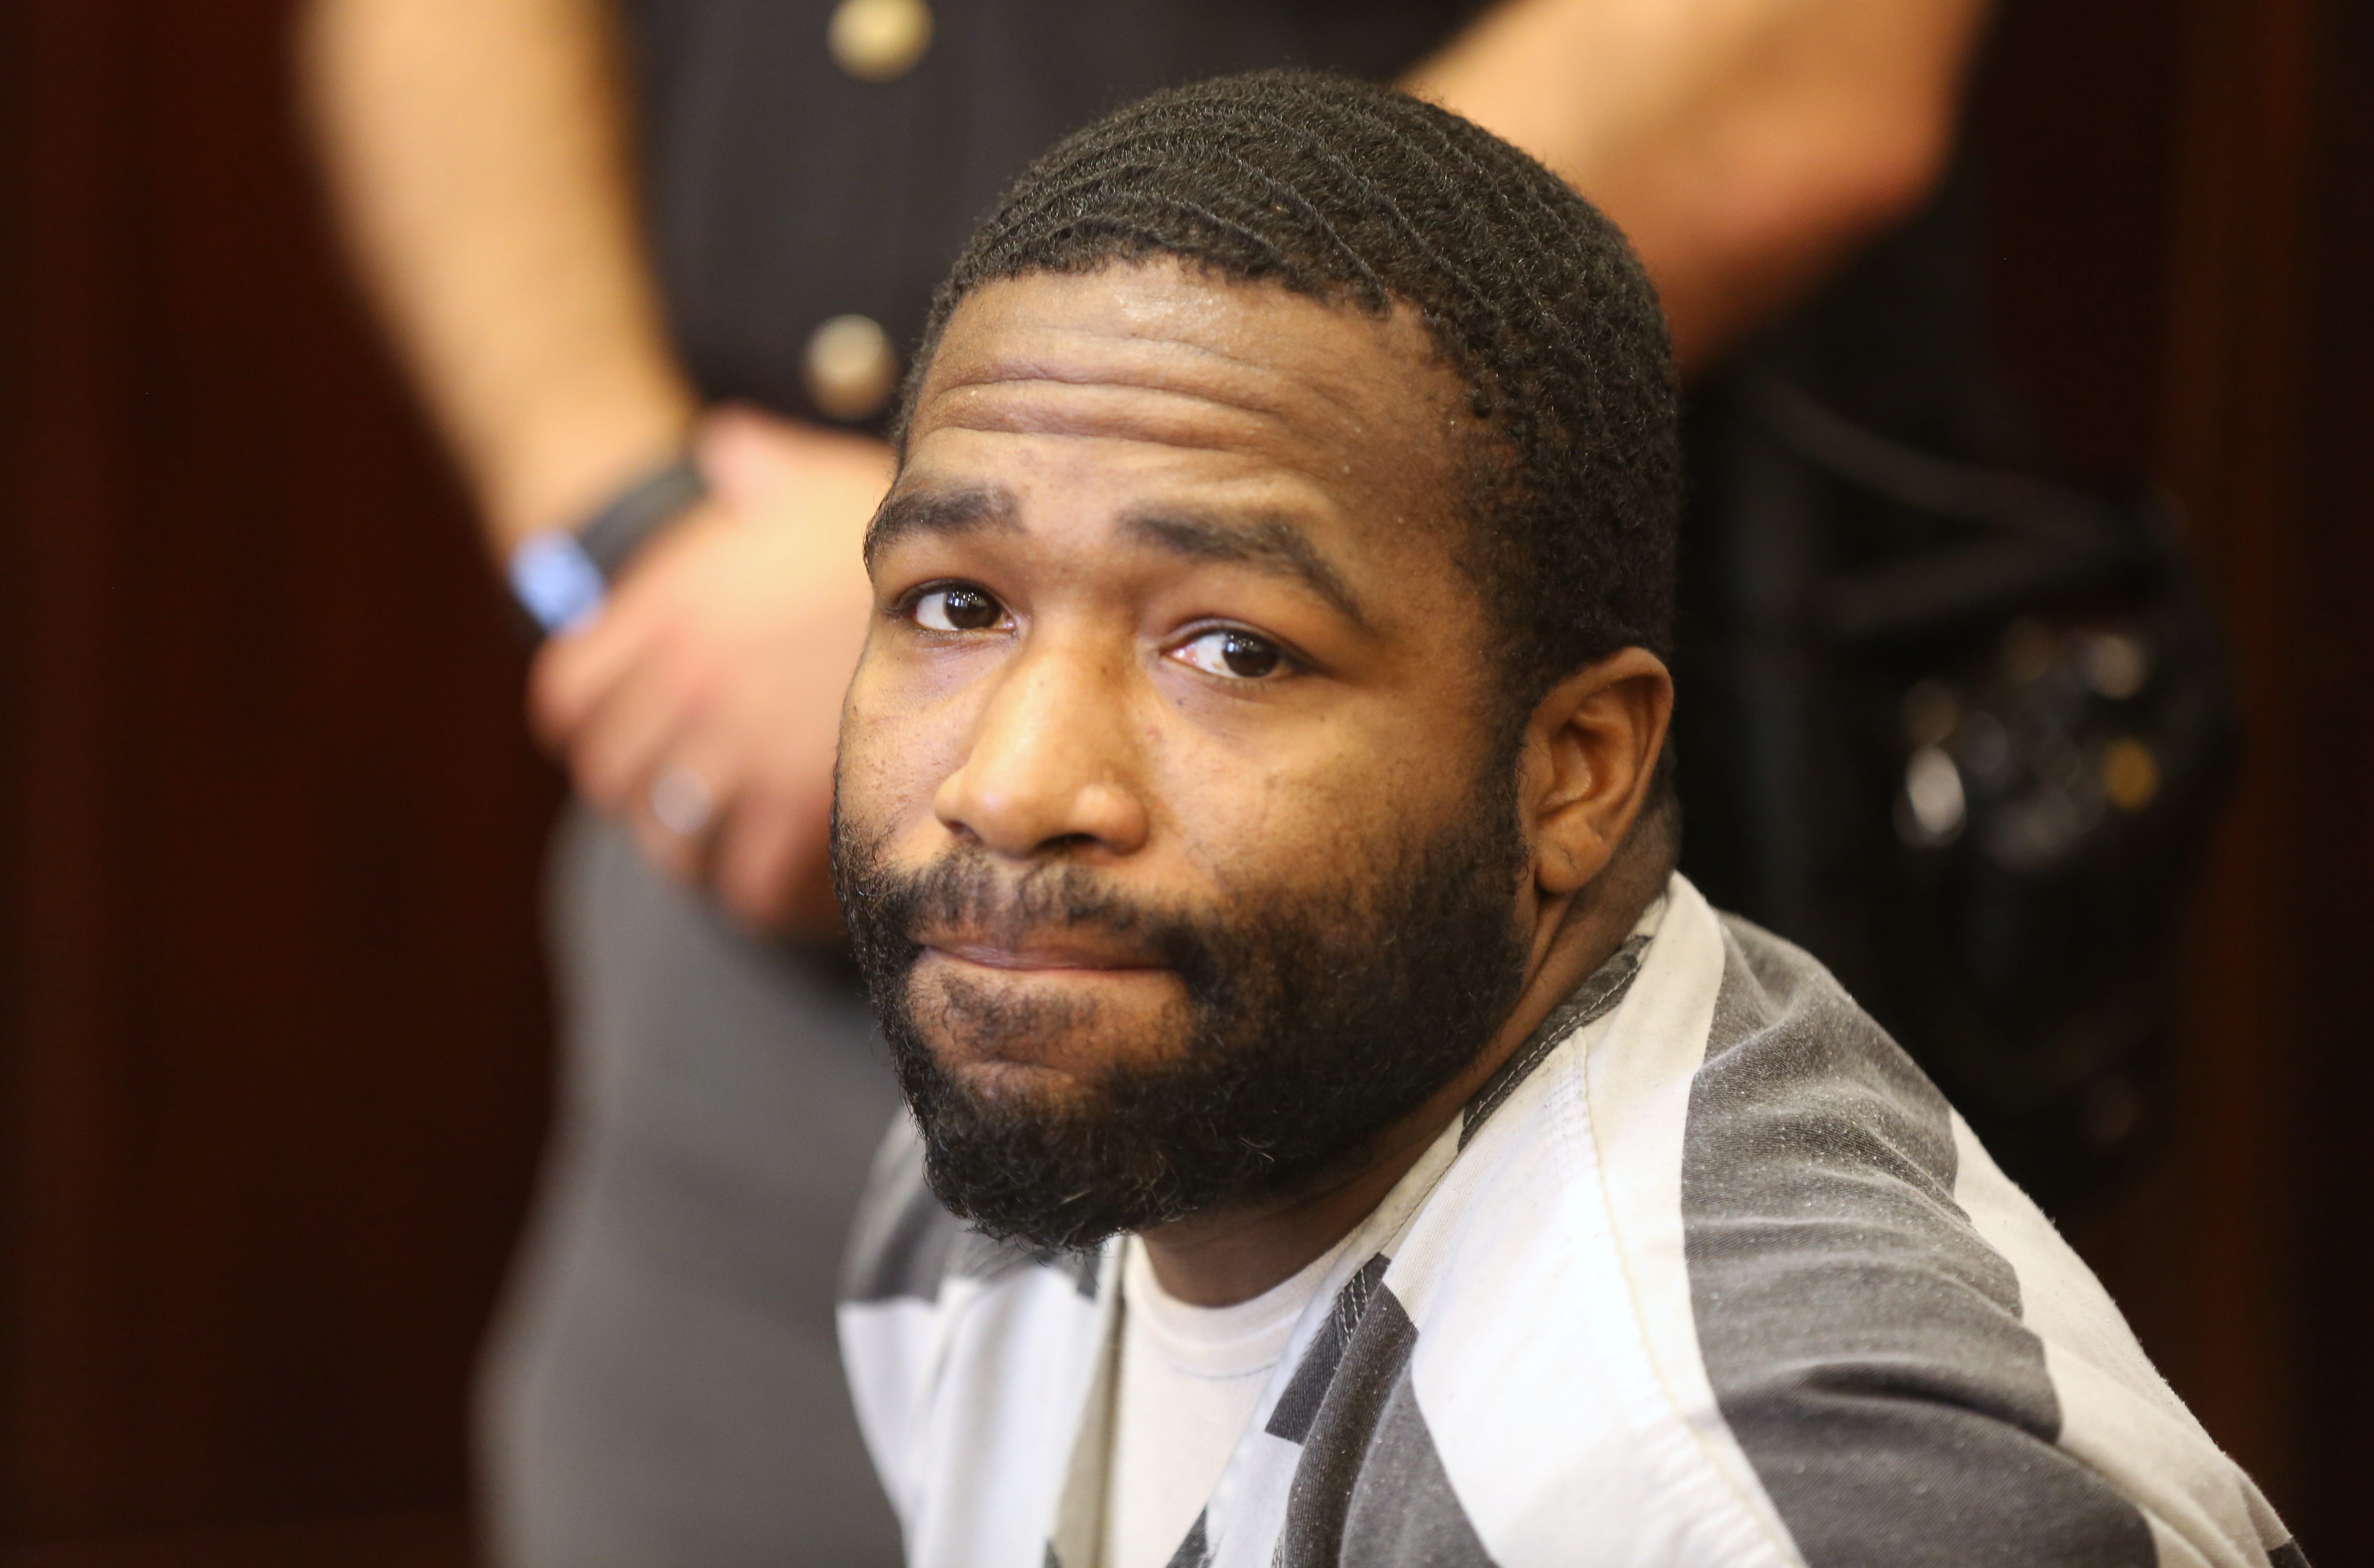 Boxer Adrien Broner to serve jail time for contempt of court - Cincinnati n...